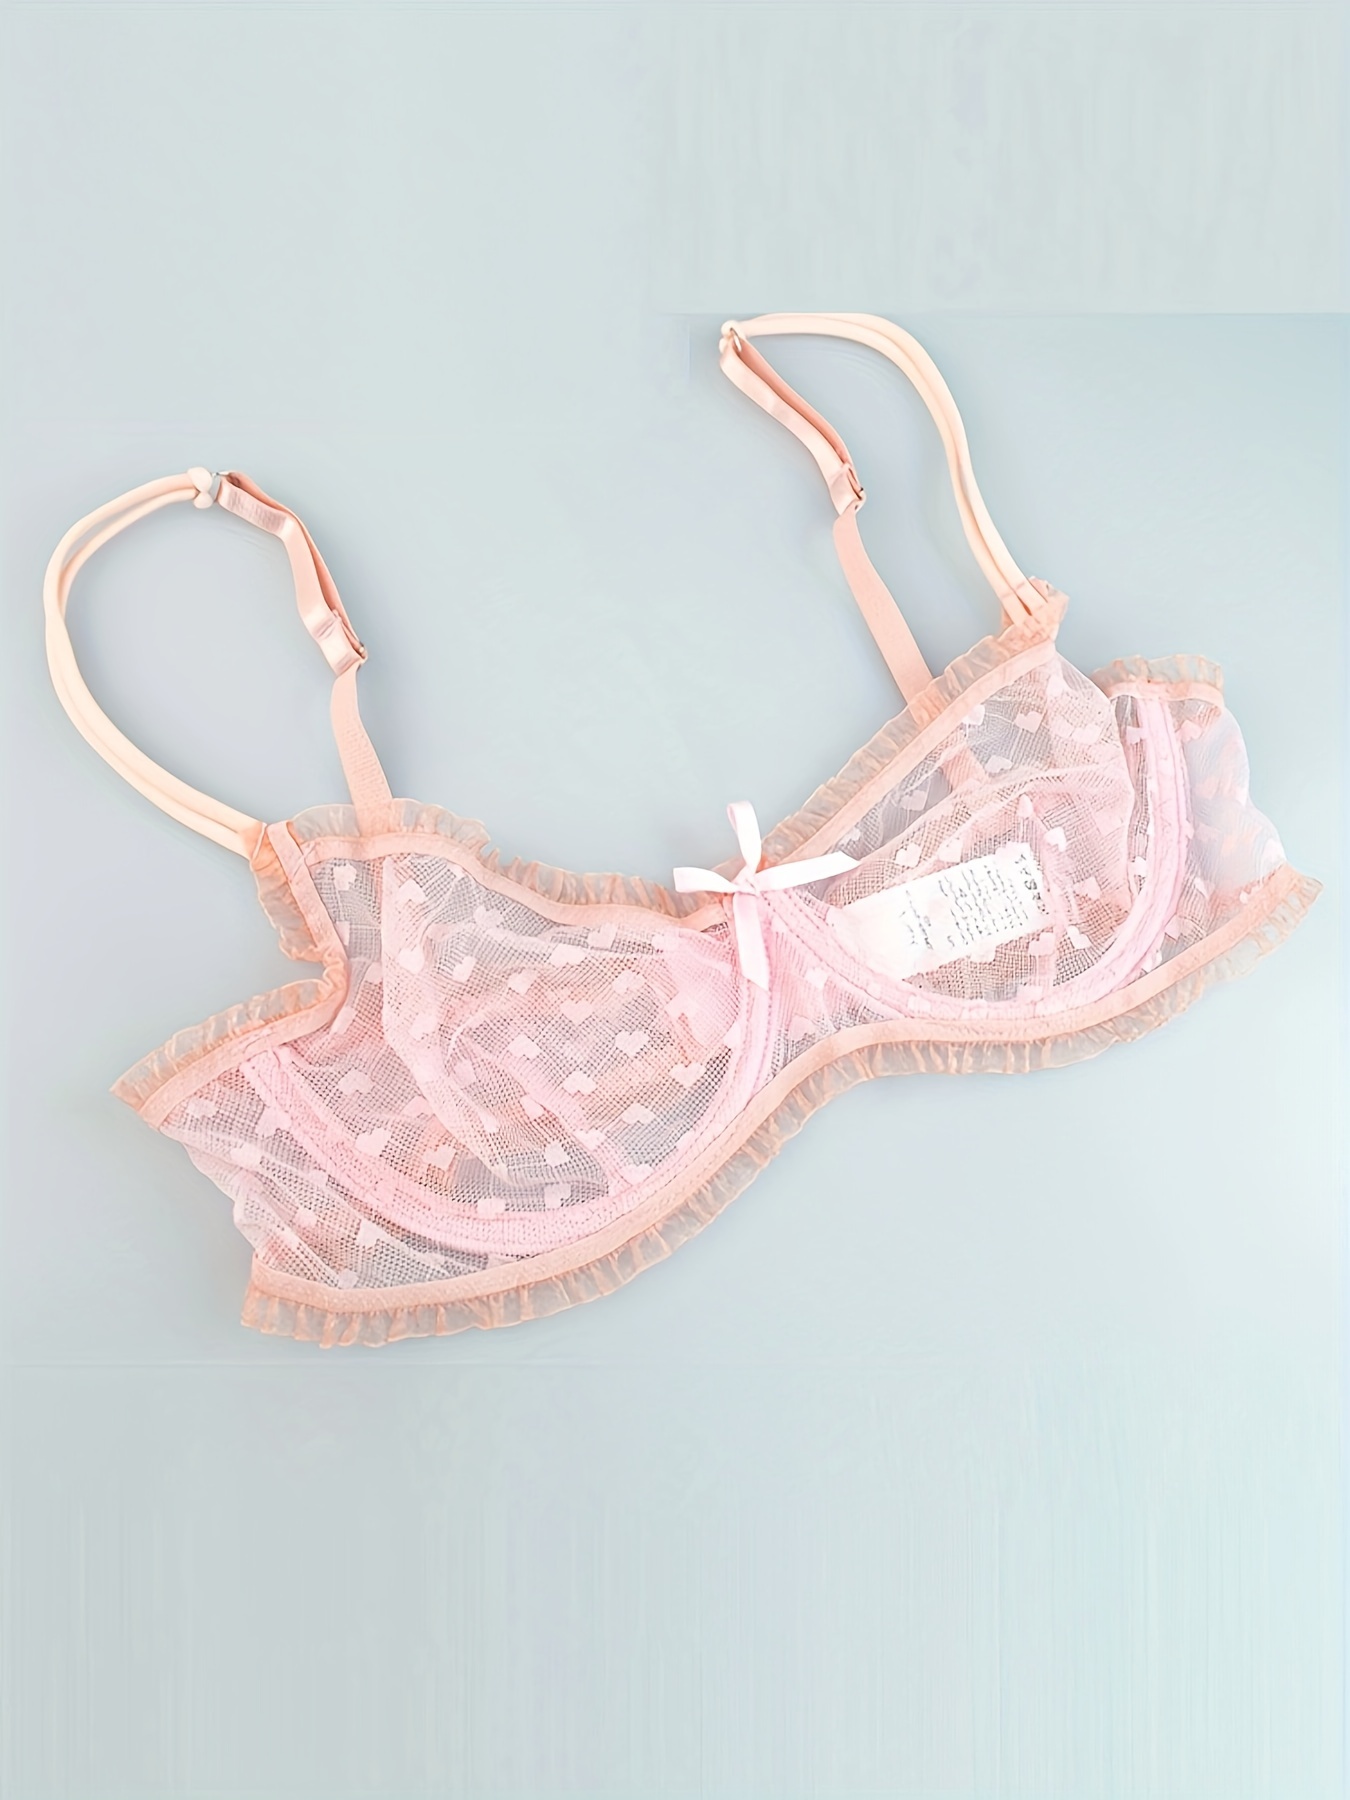 Sewing & Craft, Brand New Lace Detail Hot Pink Victoria Secret Bra